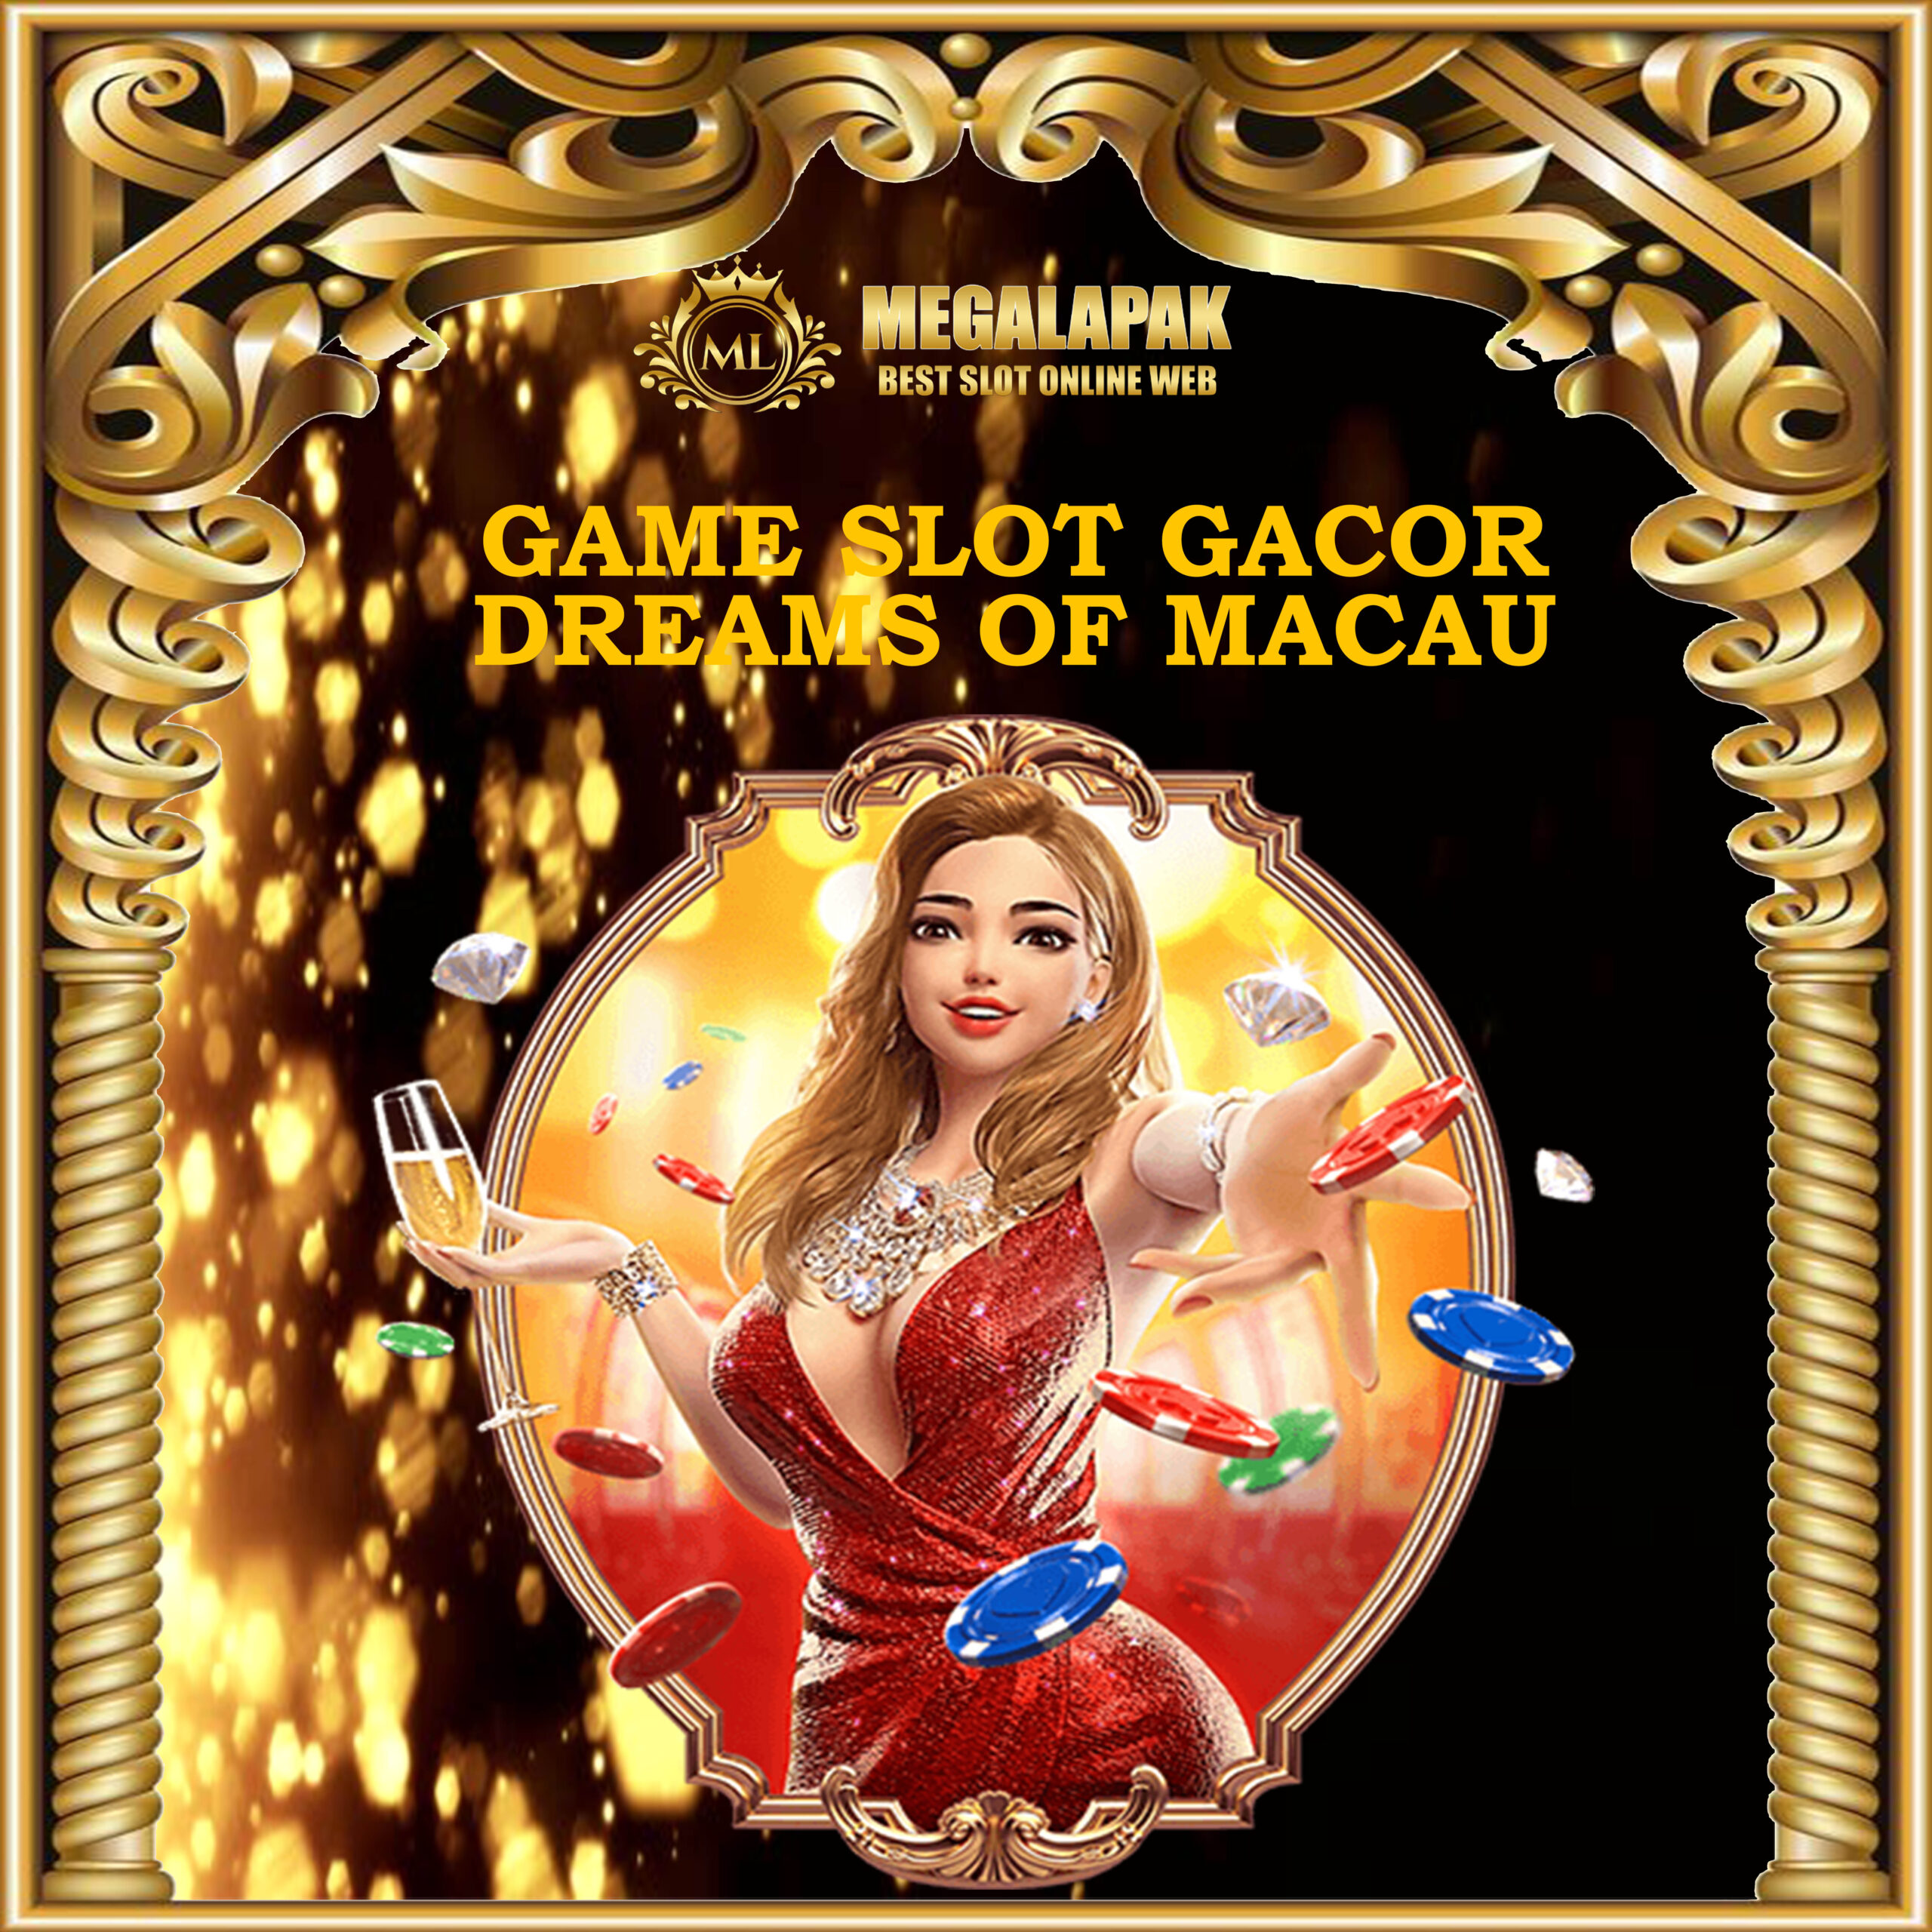 Slot Gacor Dreams Of Macau